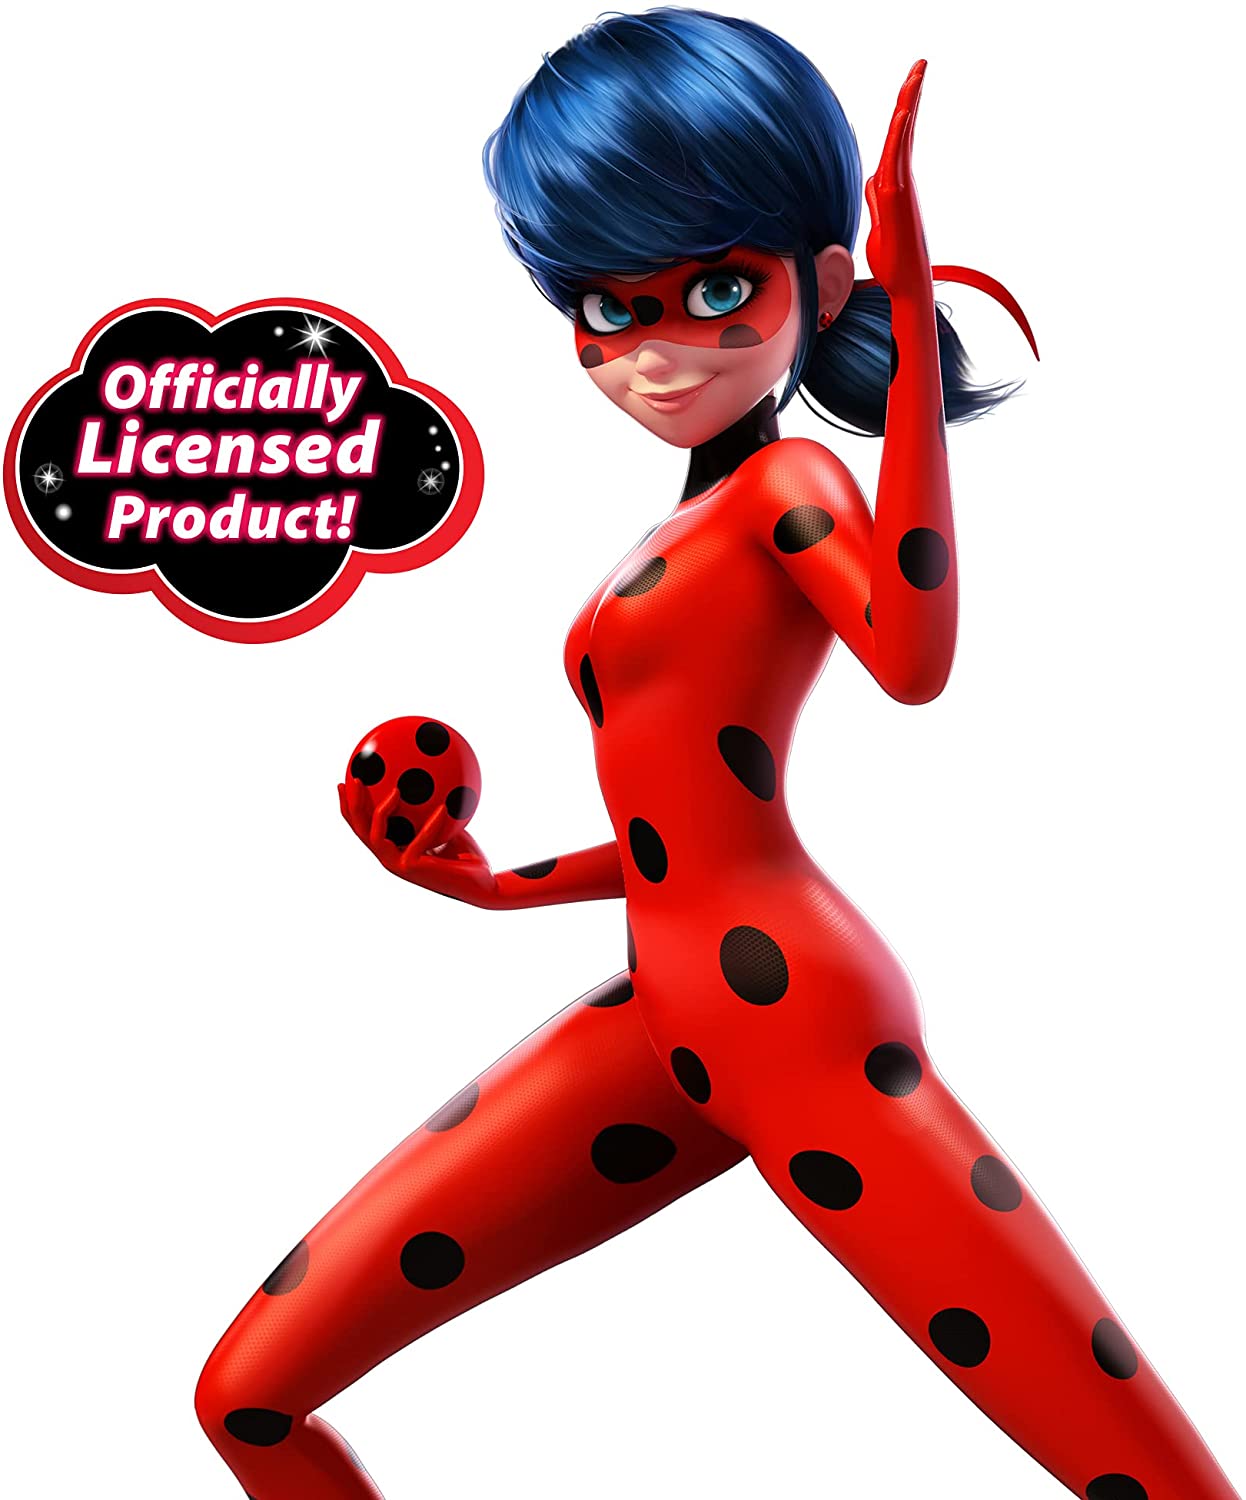 Miraculous Ladybug Dress Up Set with Yoyo, Color Change Akuma, kwami, mask and Earrings by Playmates Toys - Toy Playsets Heretoserveyou